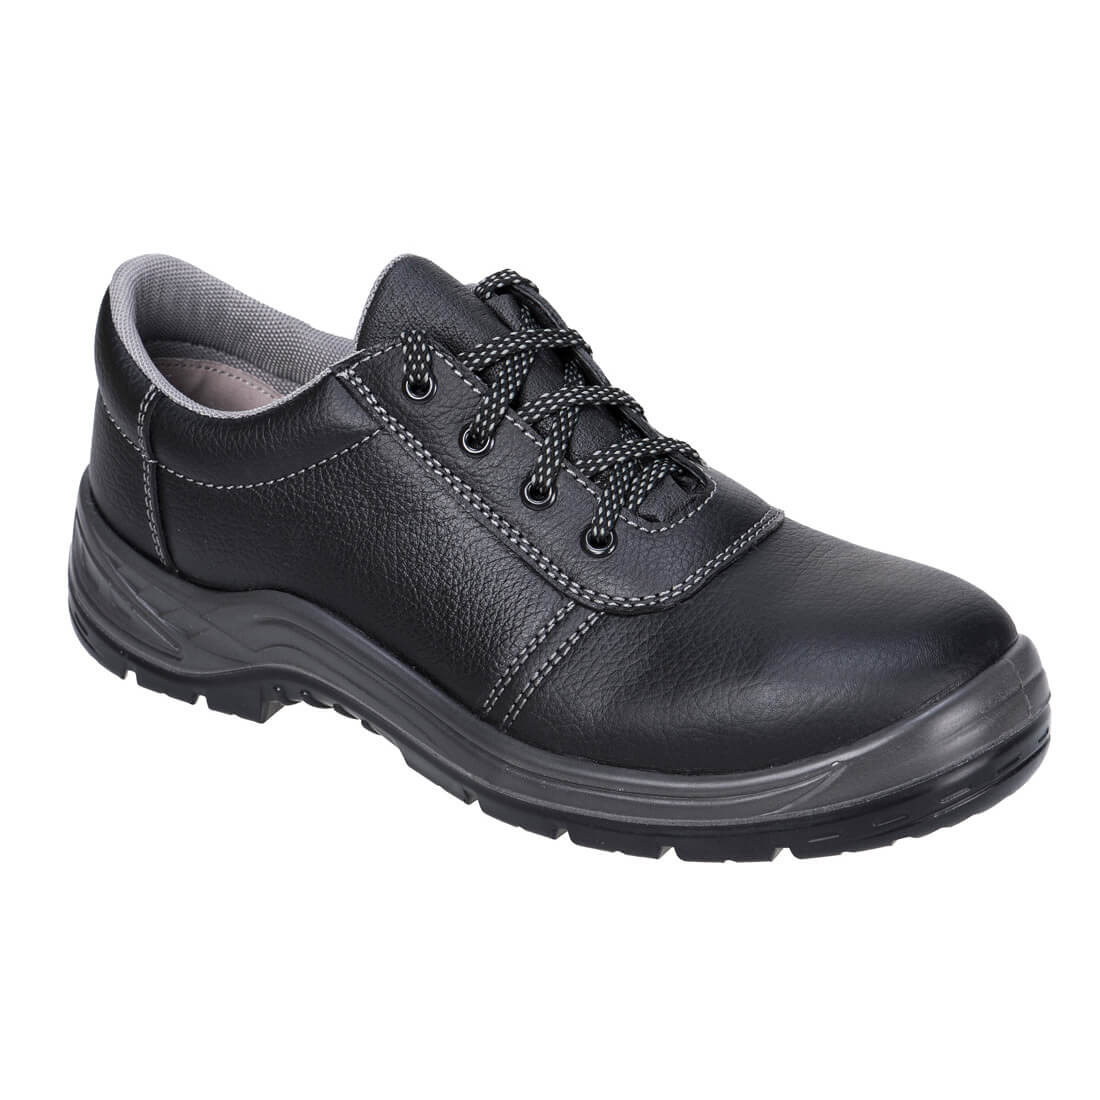 Pantof Steelite™ Kumo S3 - Incaltaminte de protectie | Bocanci, Pantofi, Sandale, Cizme